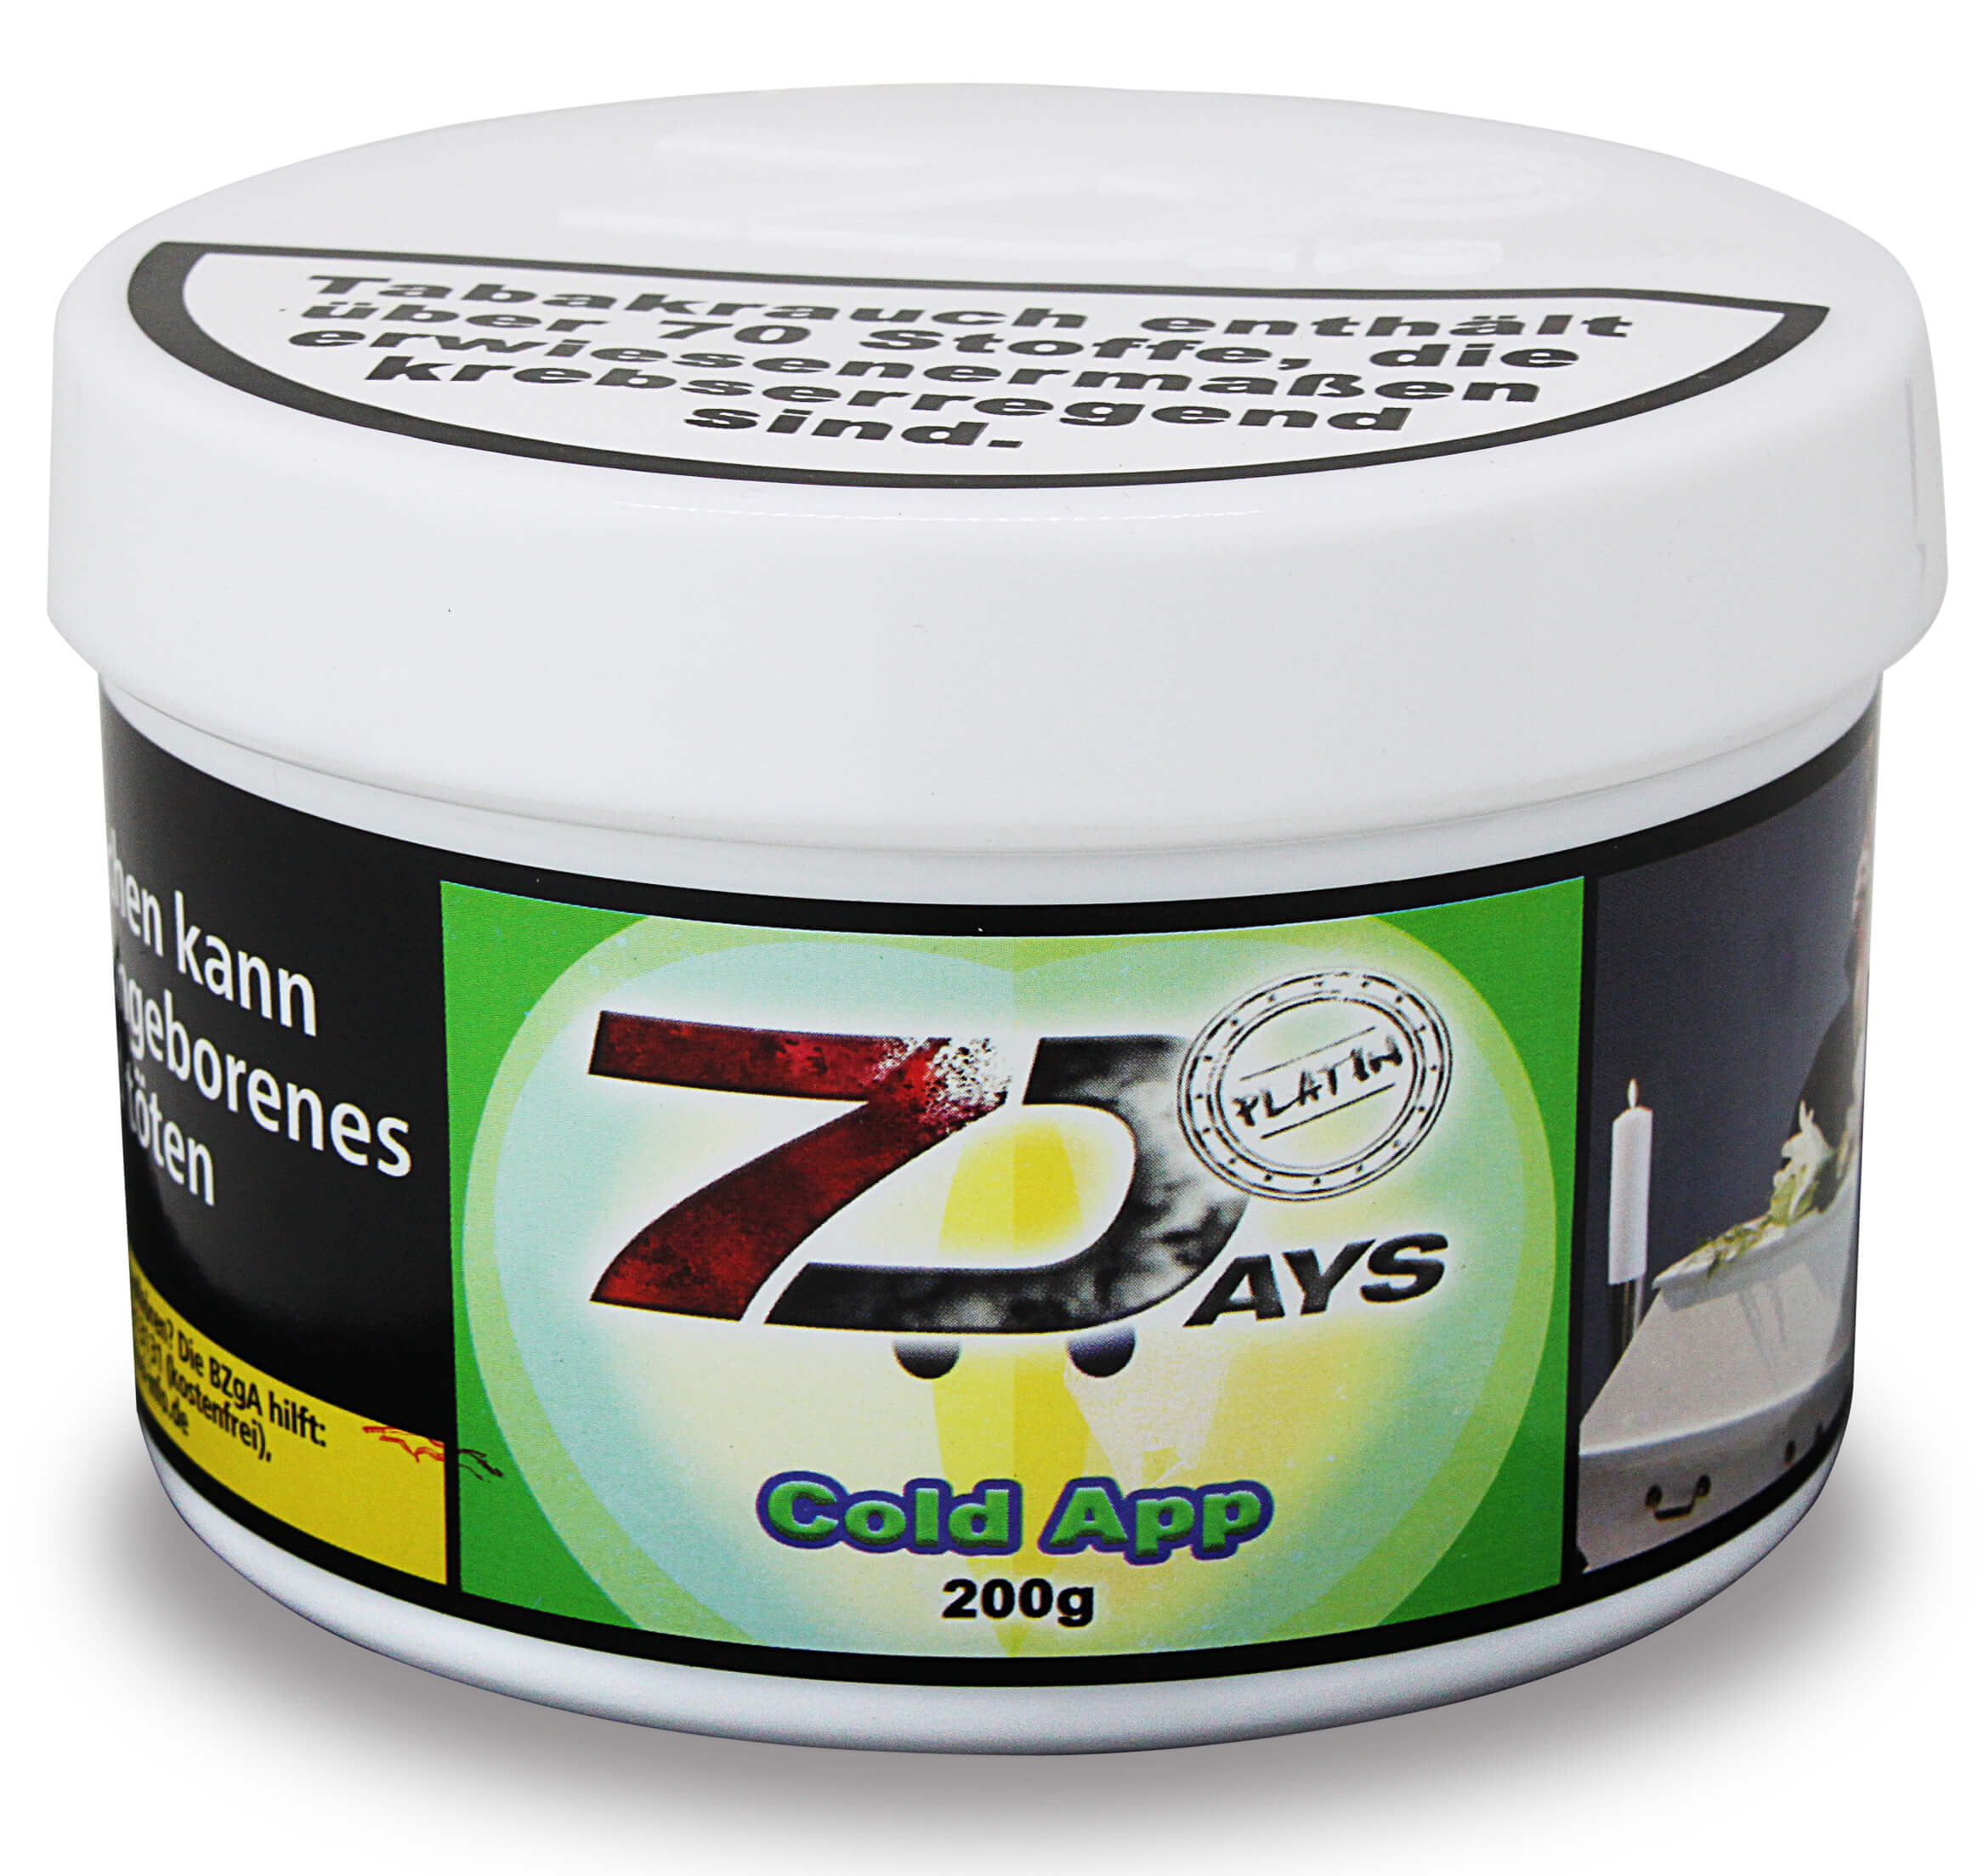 7 Days Platin Tabak - Cold App 200g